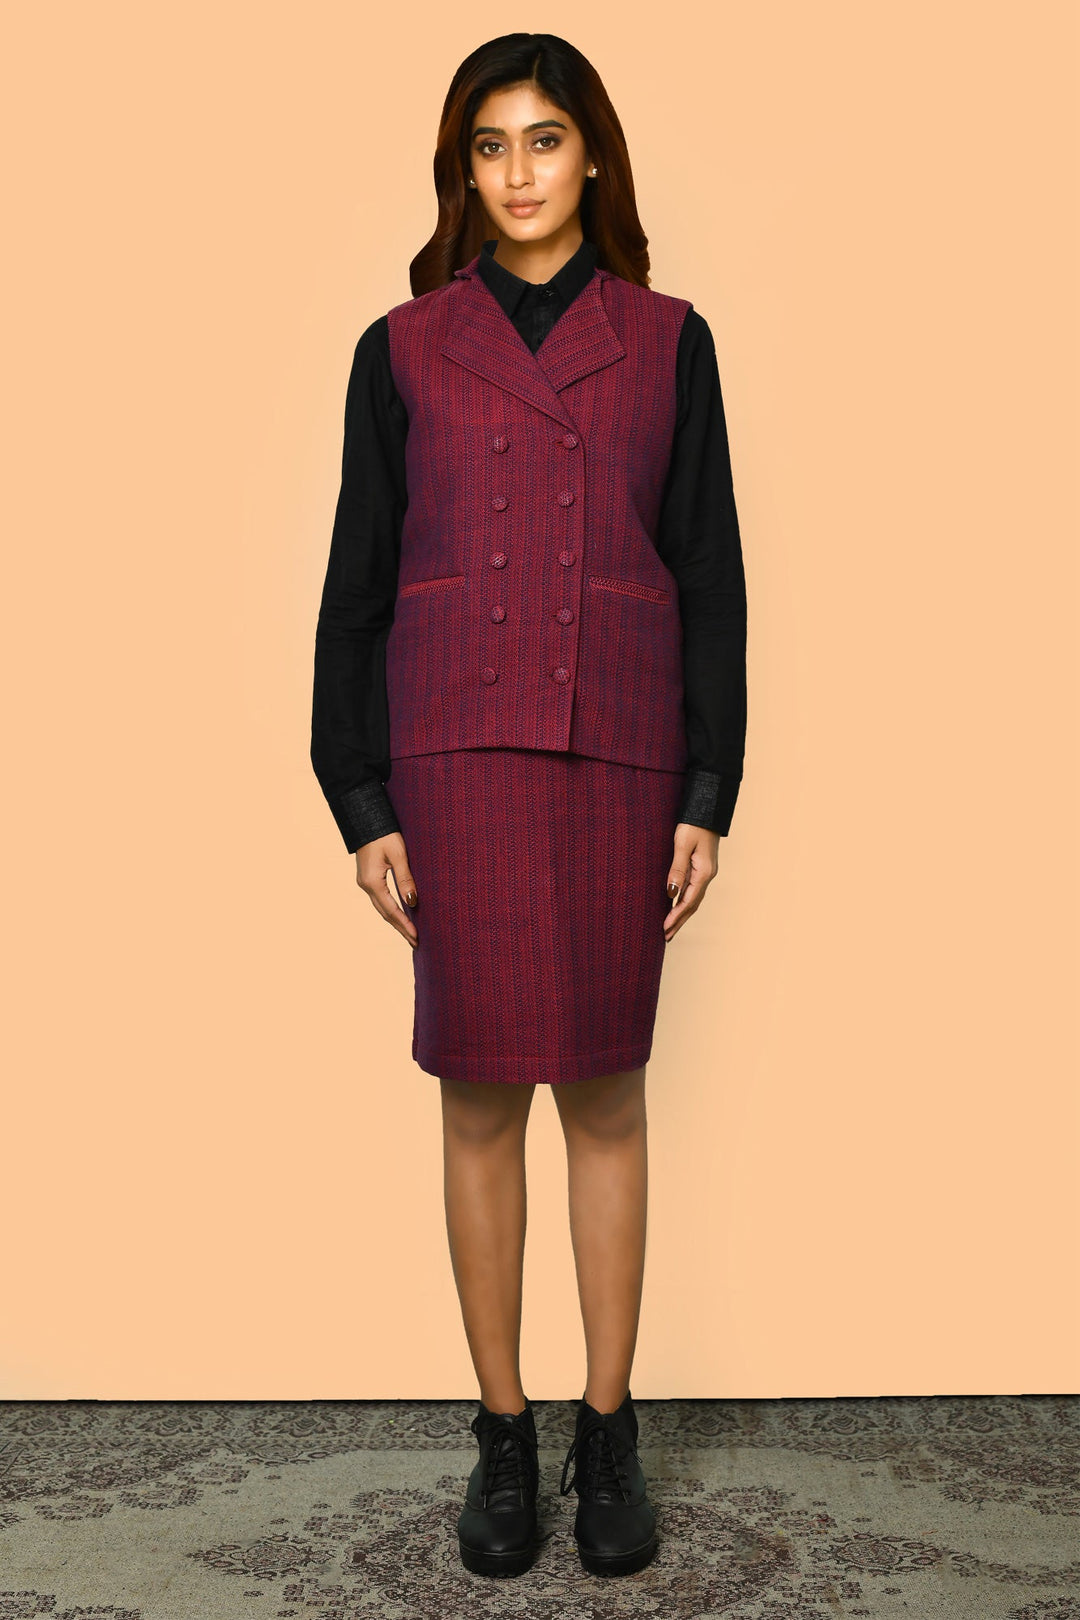 Trisha Handloom Cotton Skirt Co-Ord Set